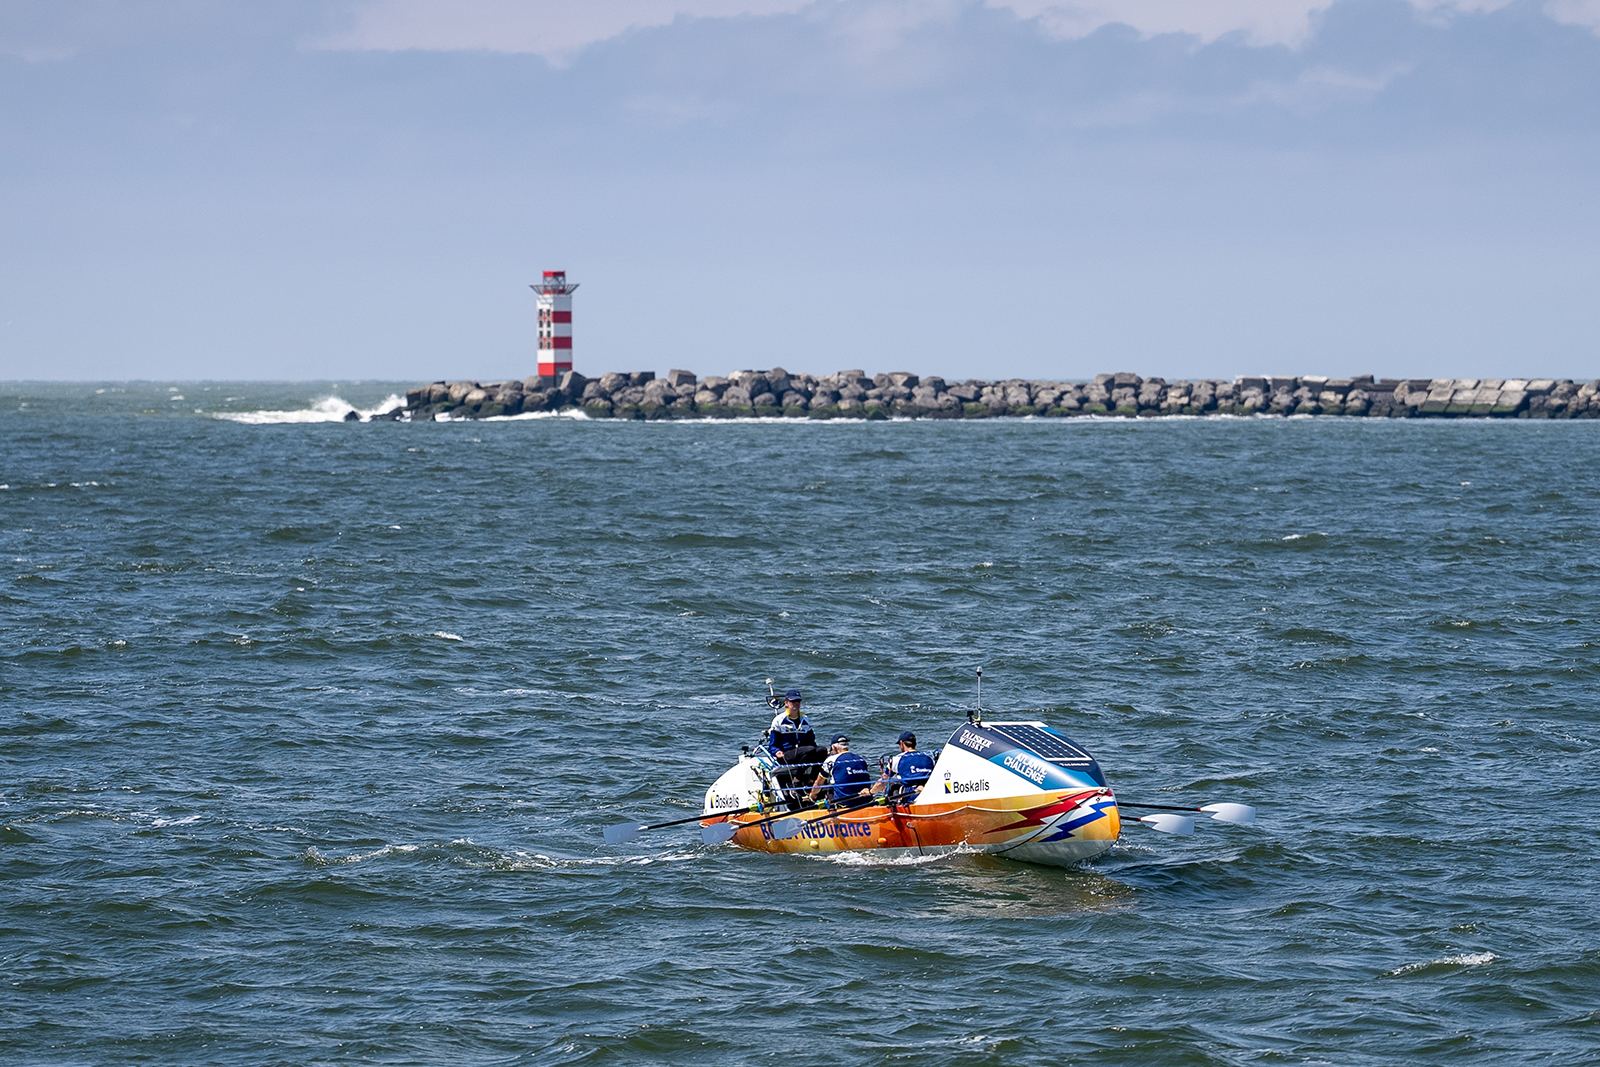 Team BOKA NEDurance practicing off the Dutch coast